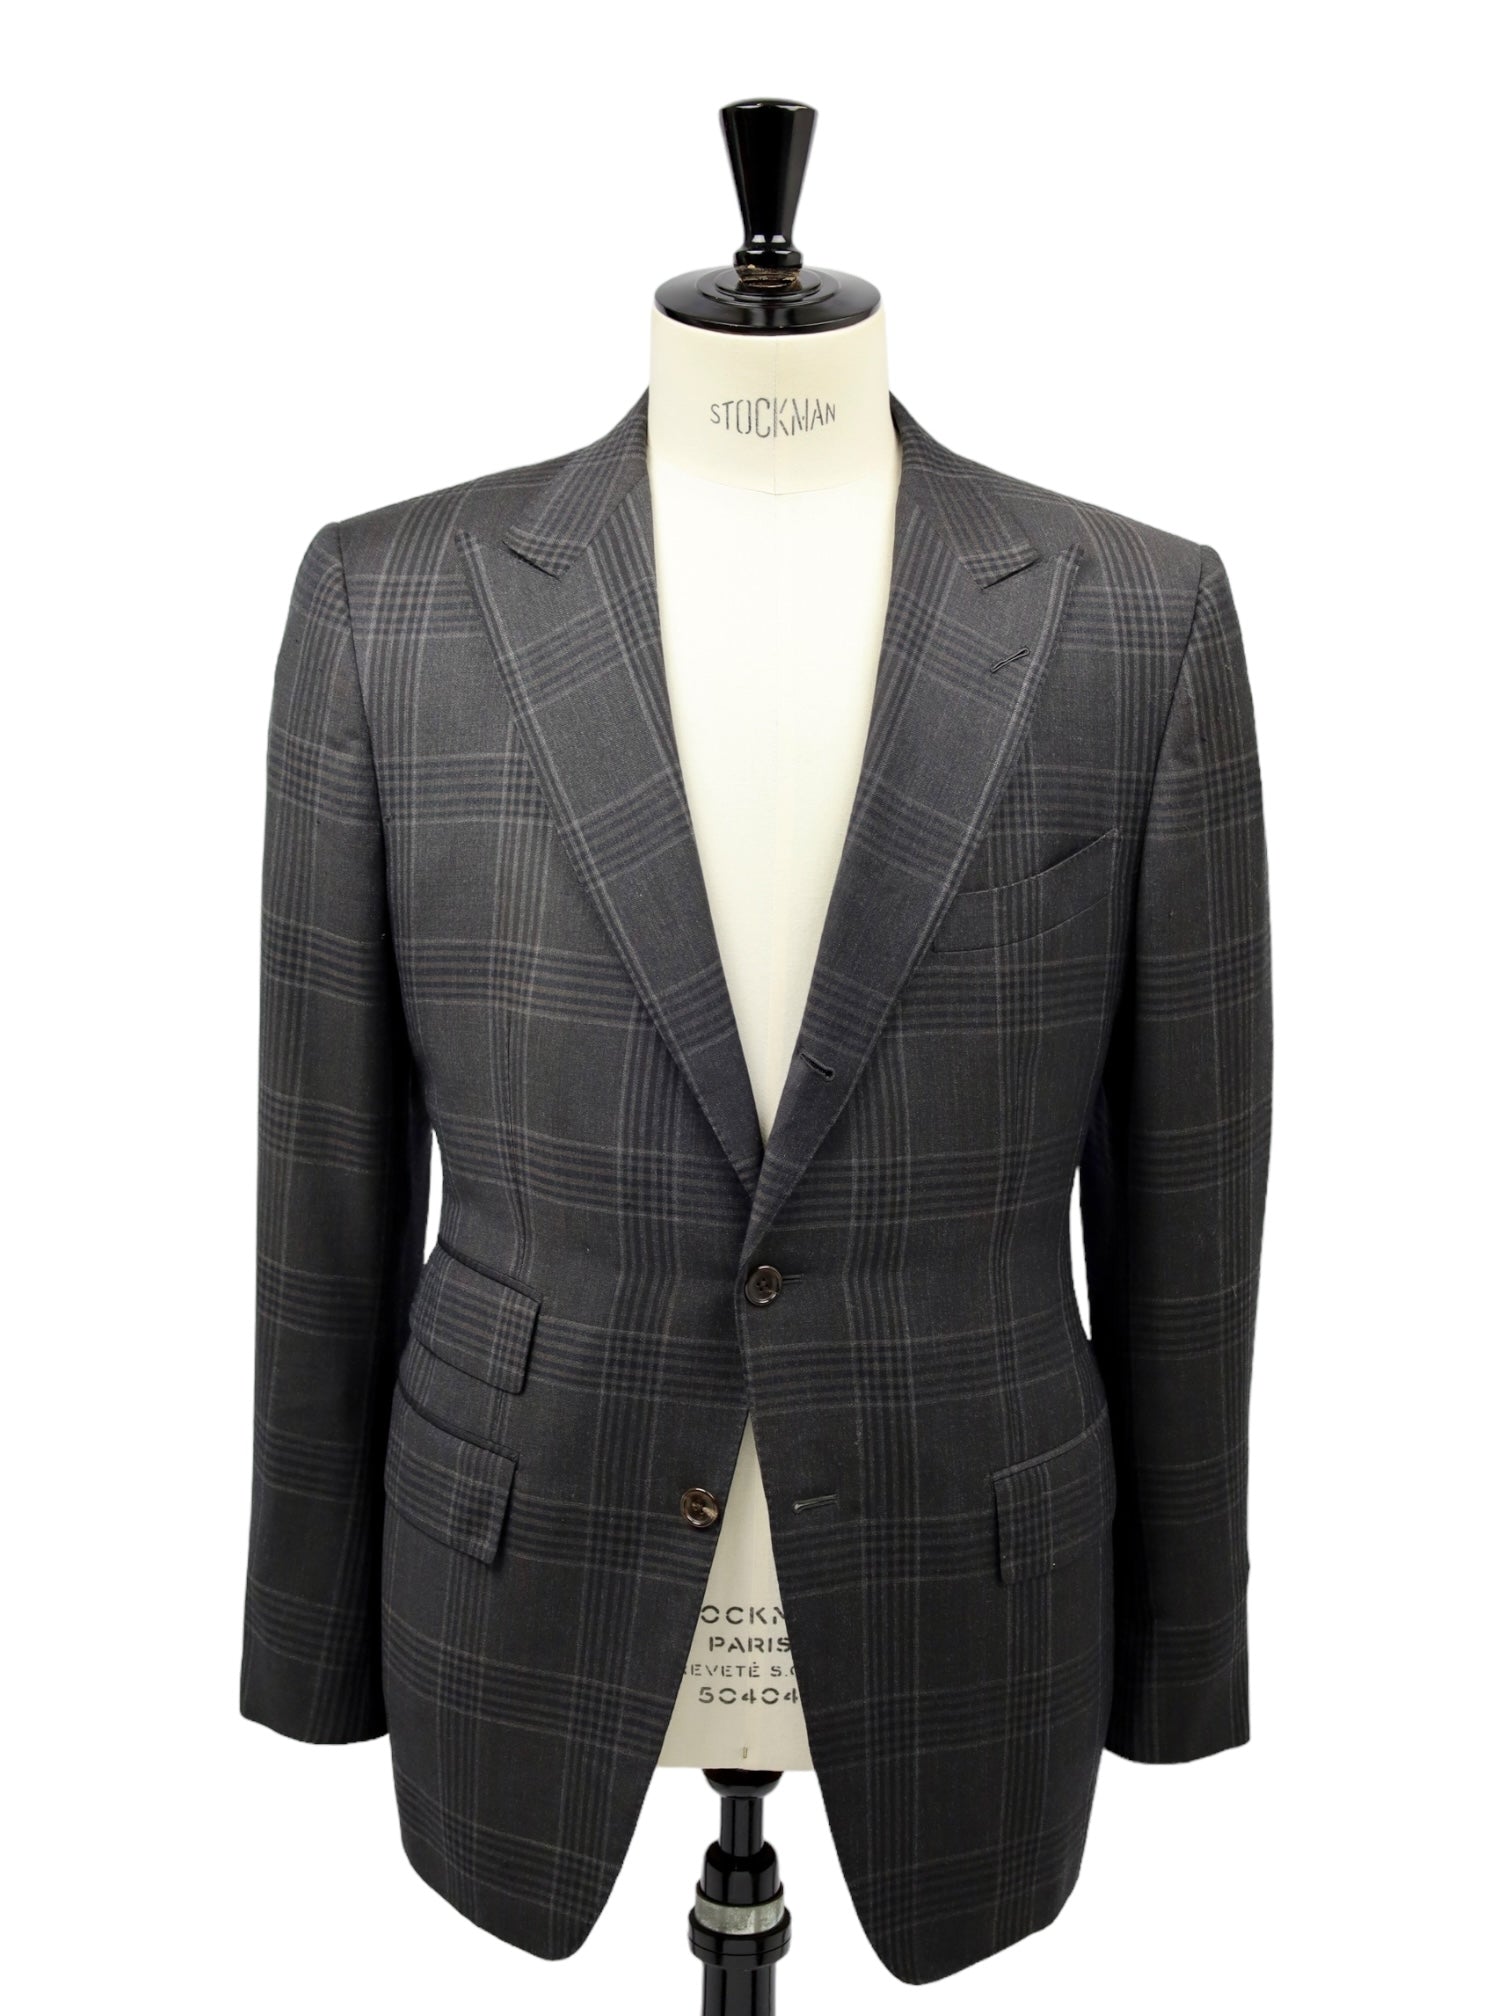 Tom Ford Dark Brown Glenplaid Suit